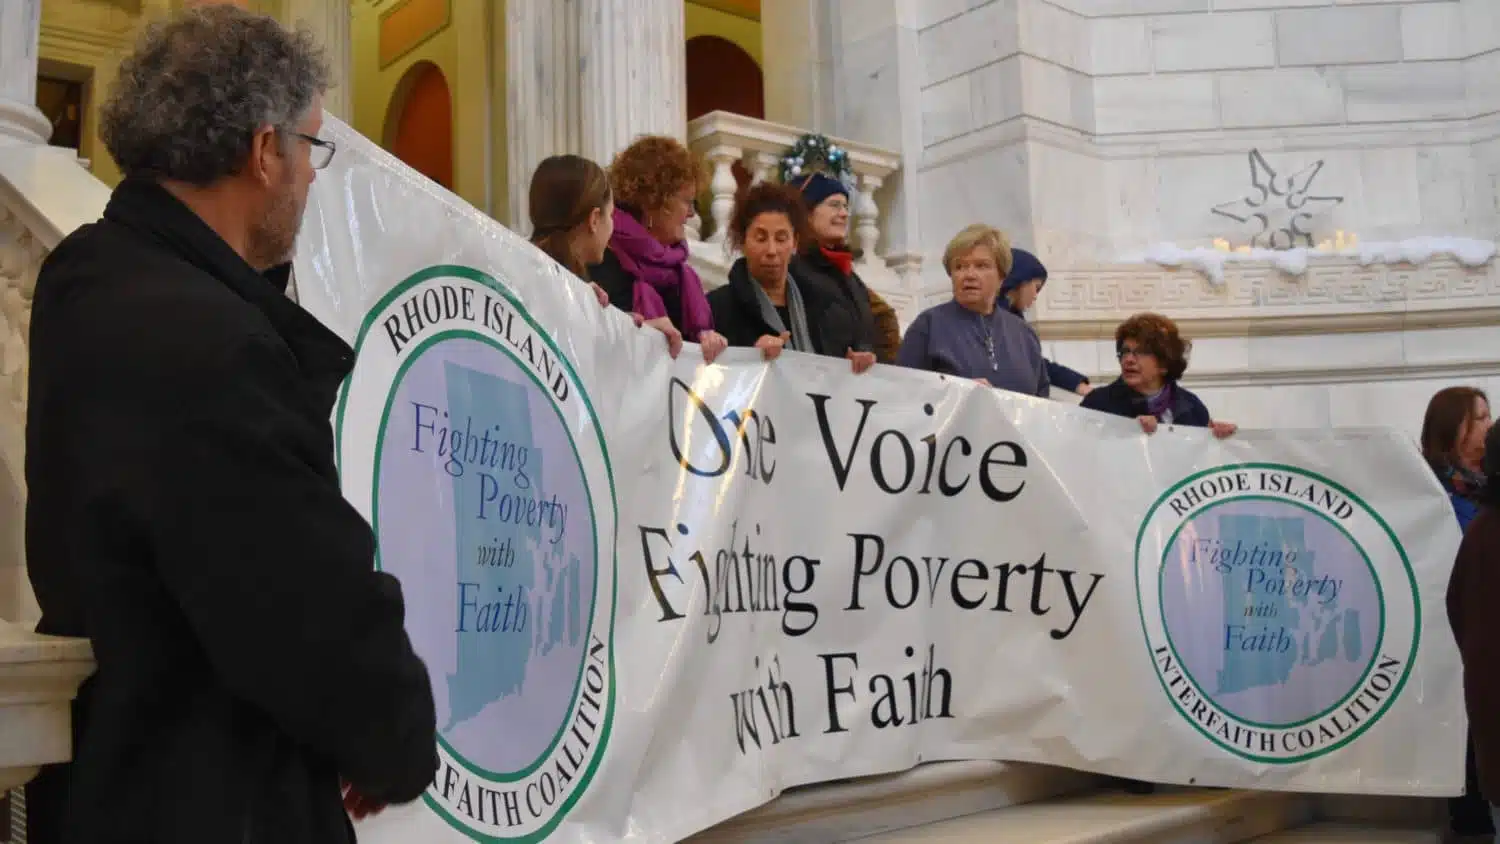 10th Annual Fighting Poverty with Faith Vigil unveils its 2018 legislative agenda